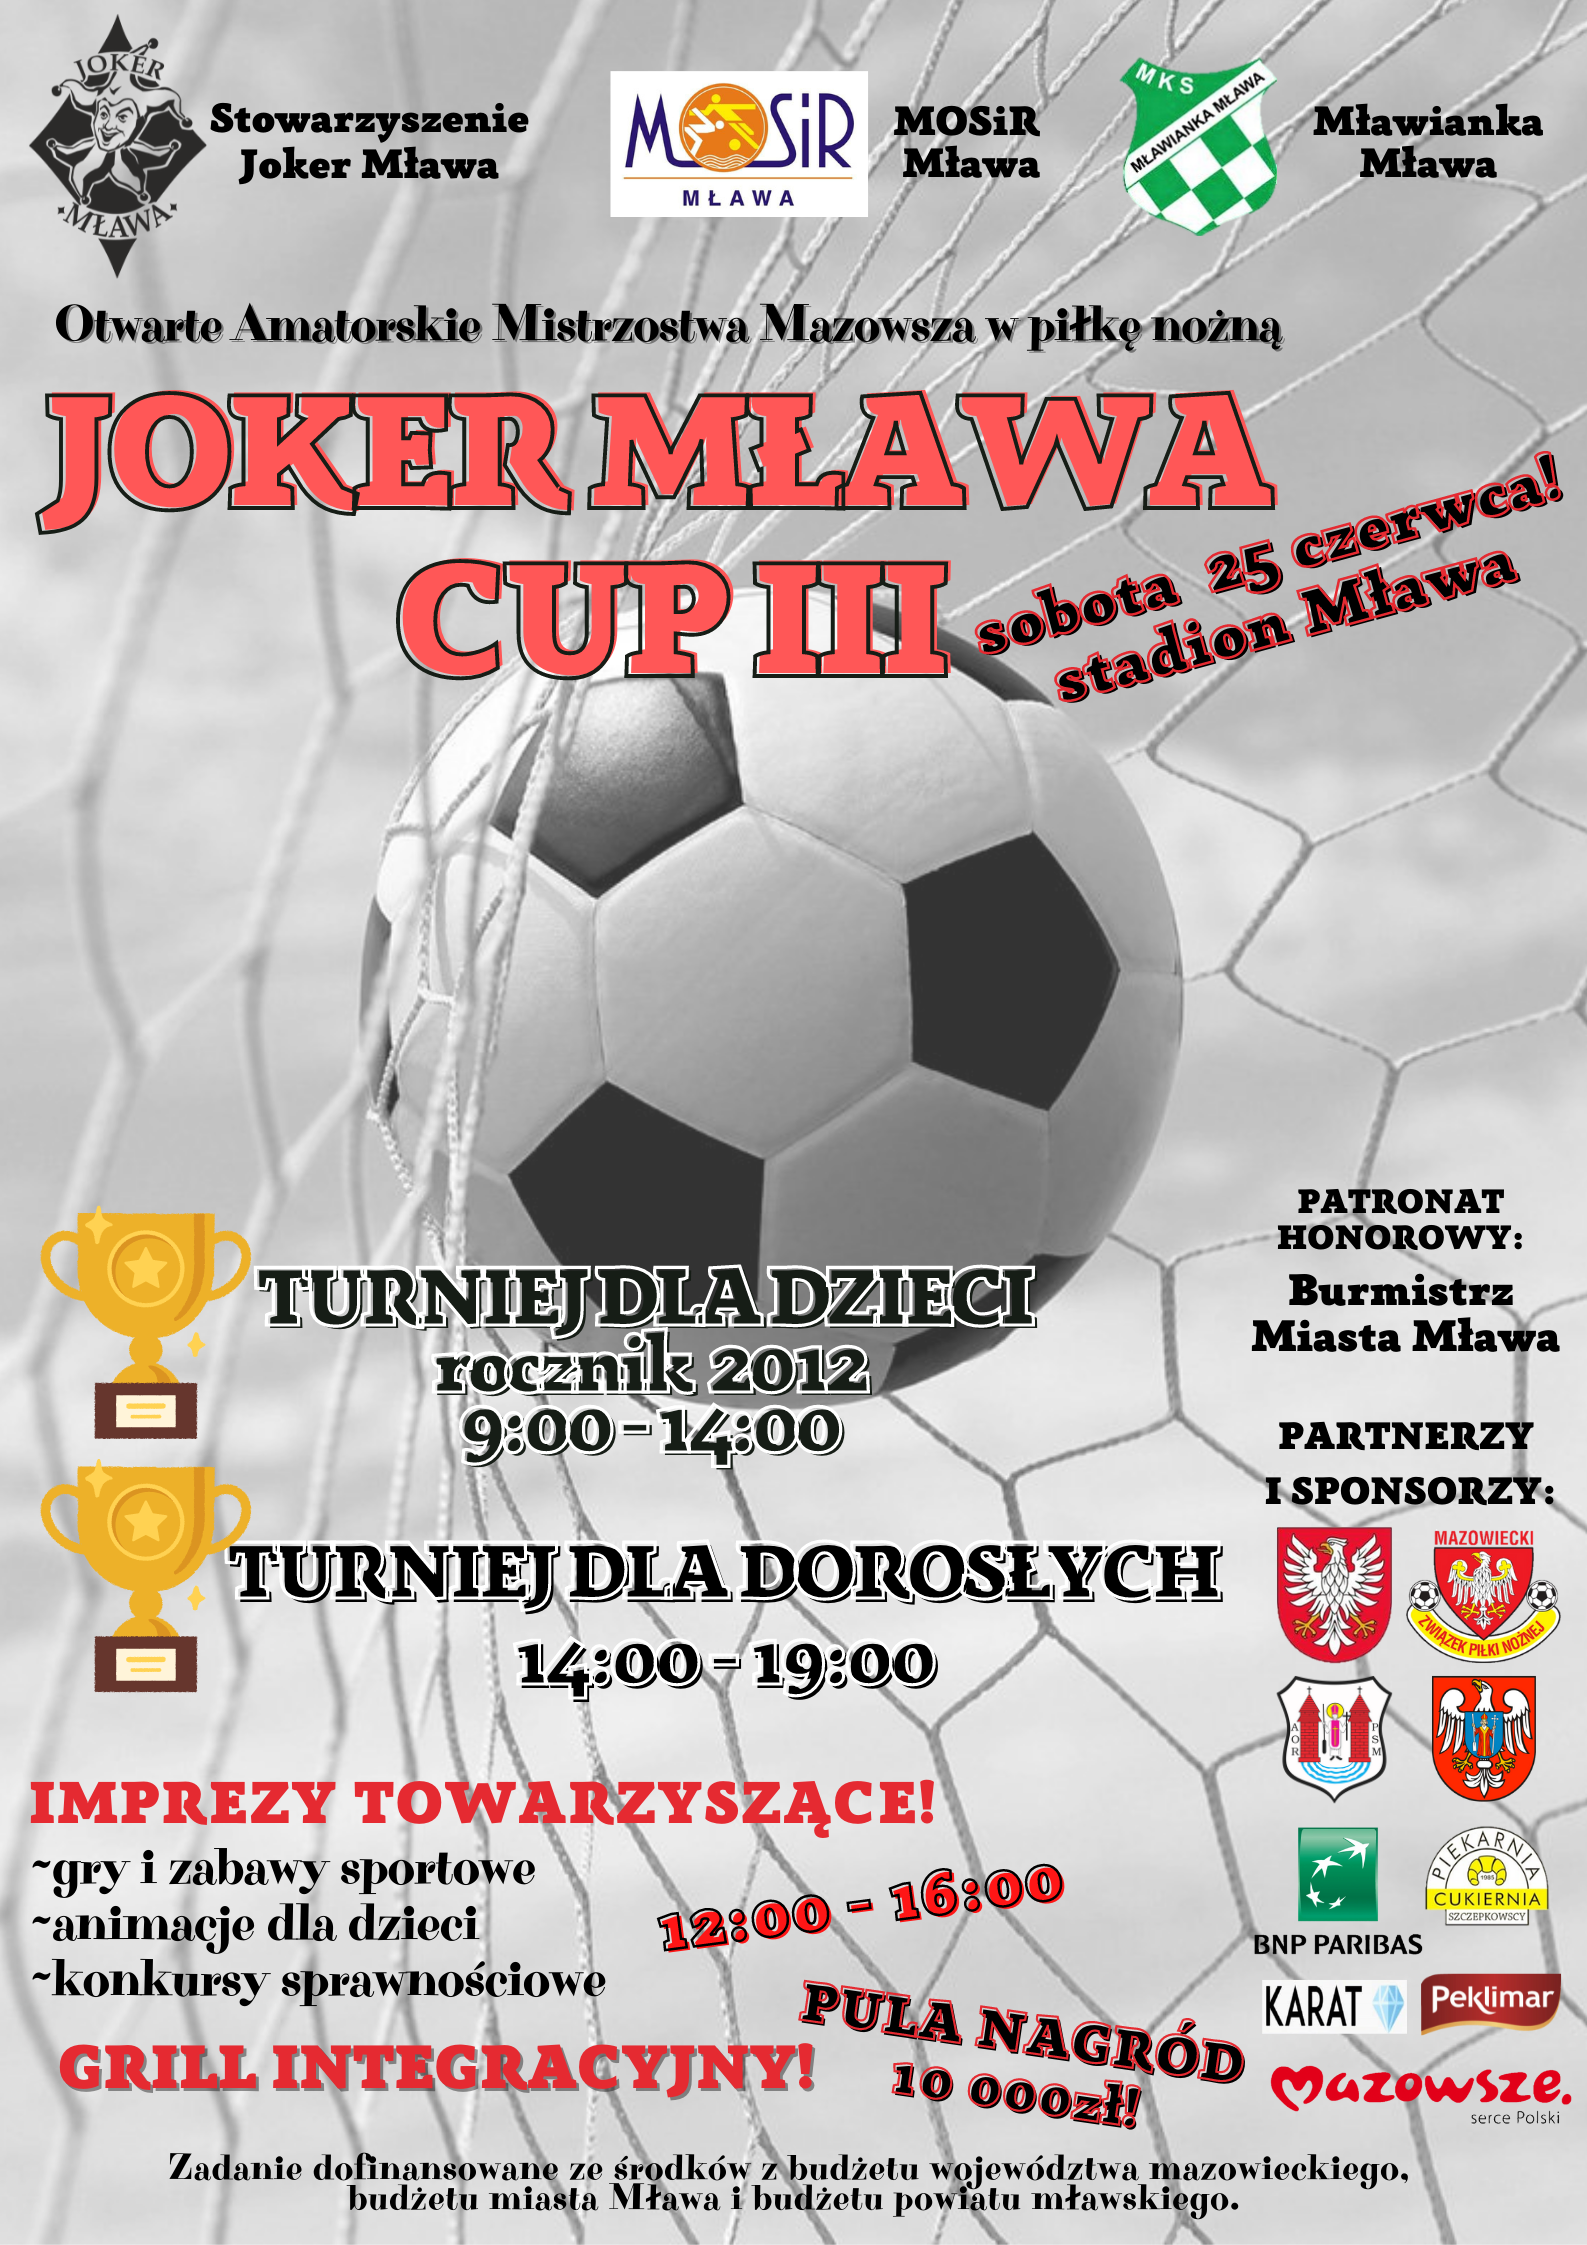 JOKER MŁAWA CUP III plakat.png 1